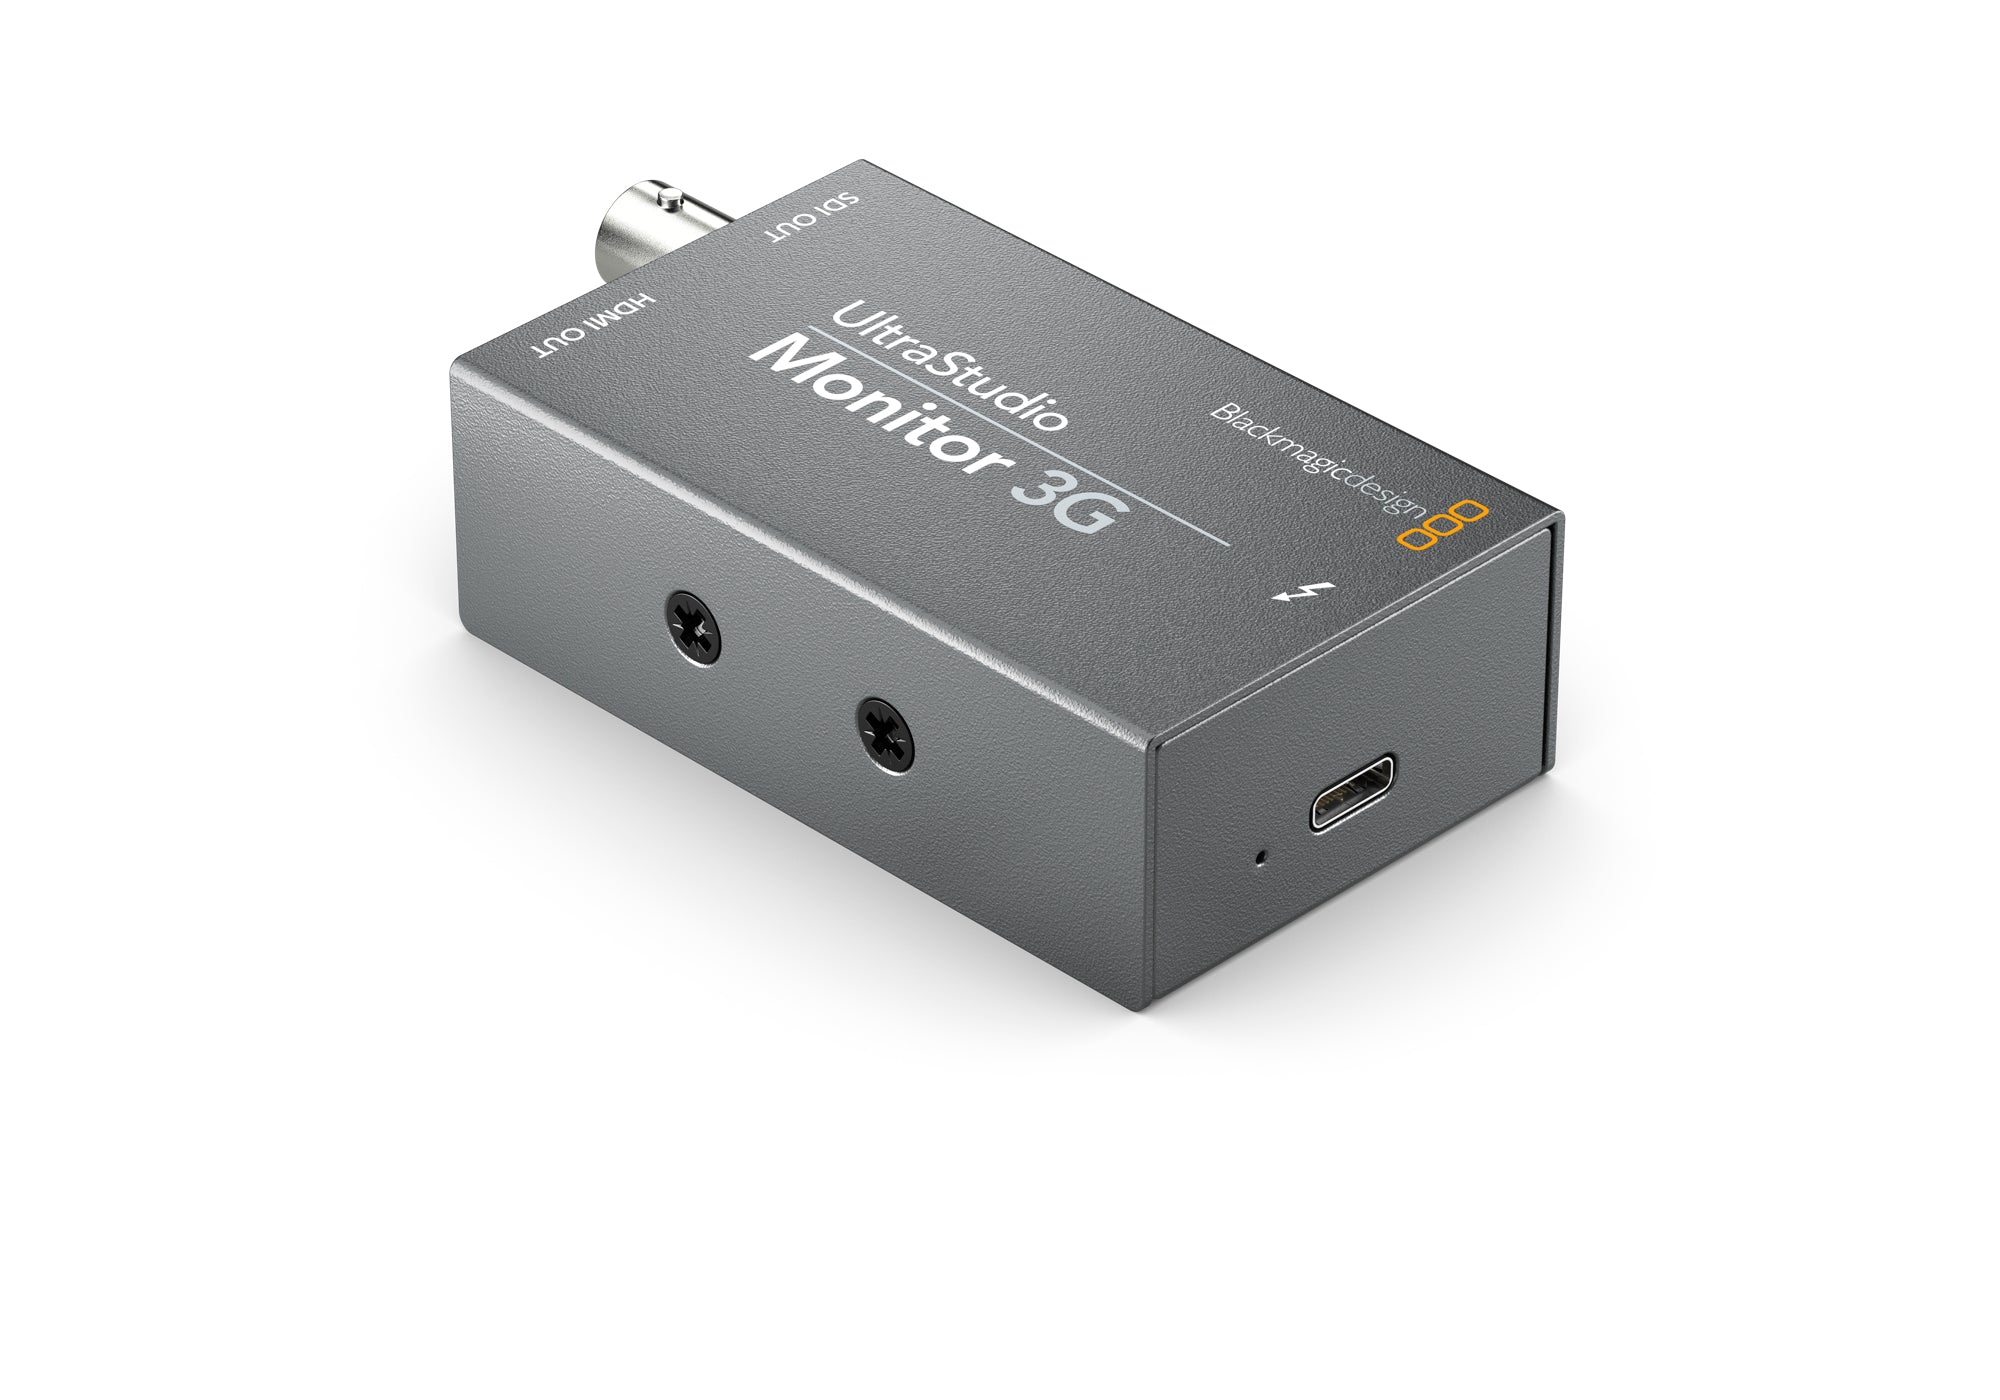 Blackmagic Design UltraStudio Monitor 3G 3G-SDI/HDMI Playback Device